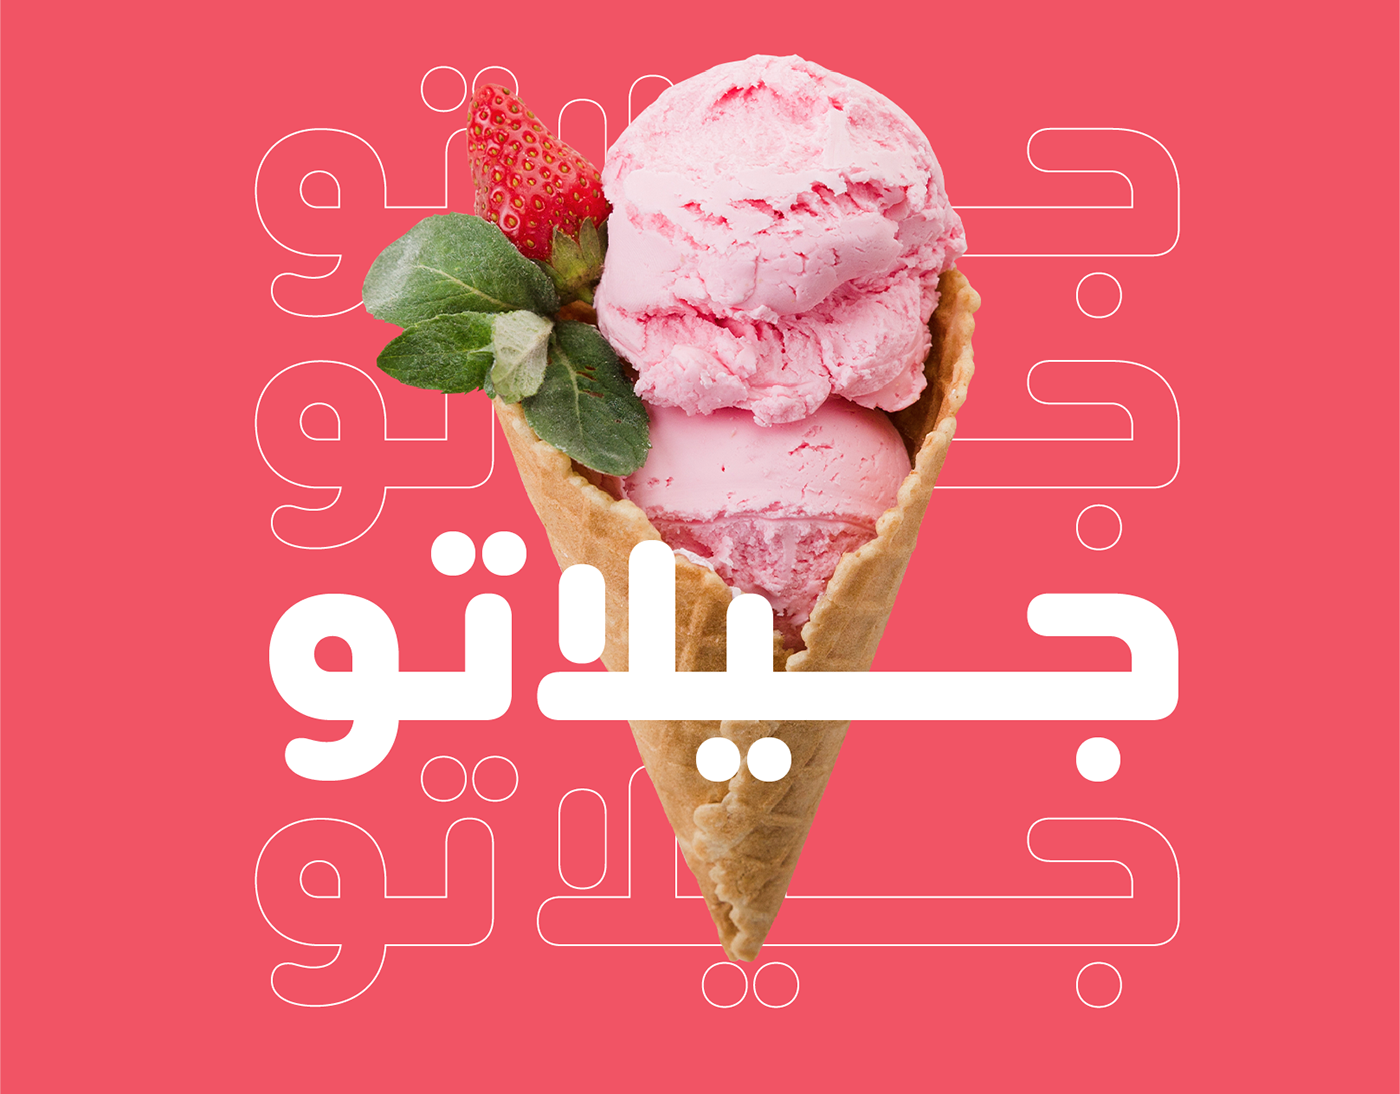 arabic font Typeface Website خط مجاني fonts lettering Rounded Font sans serif خط عربي